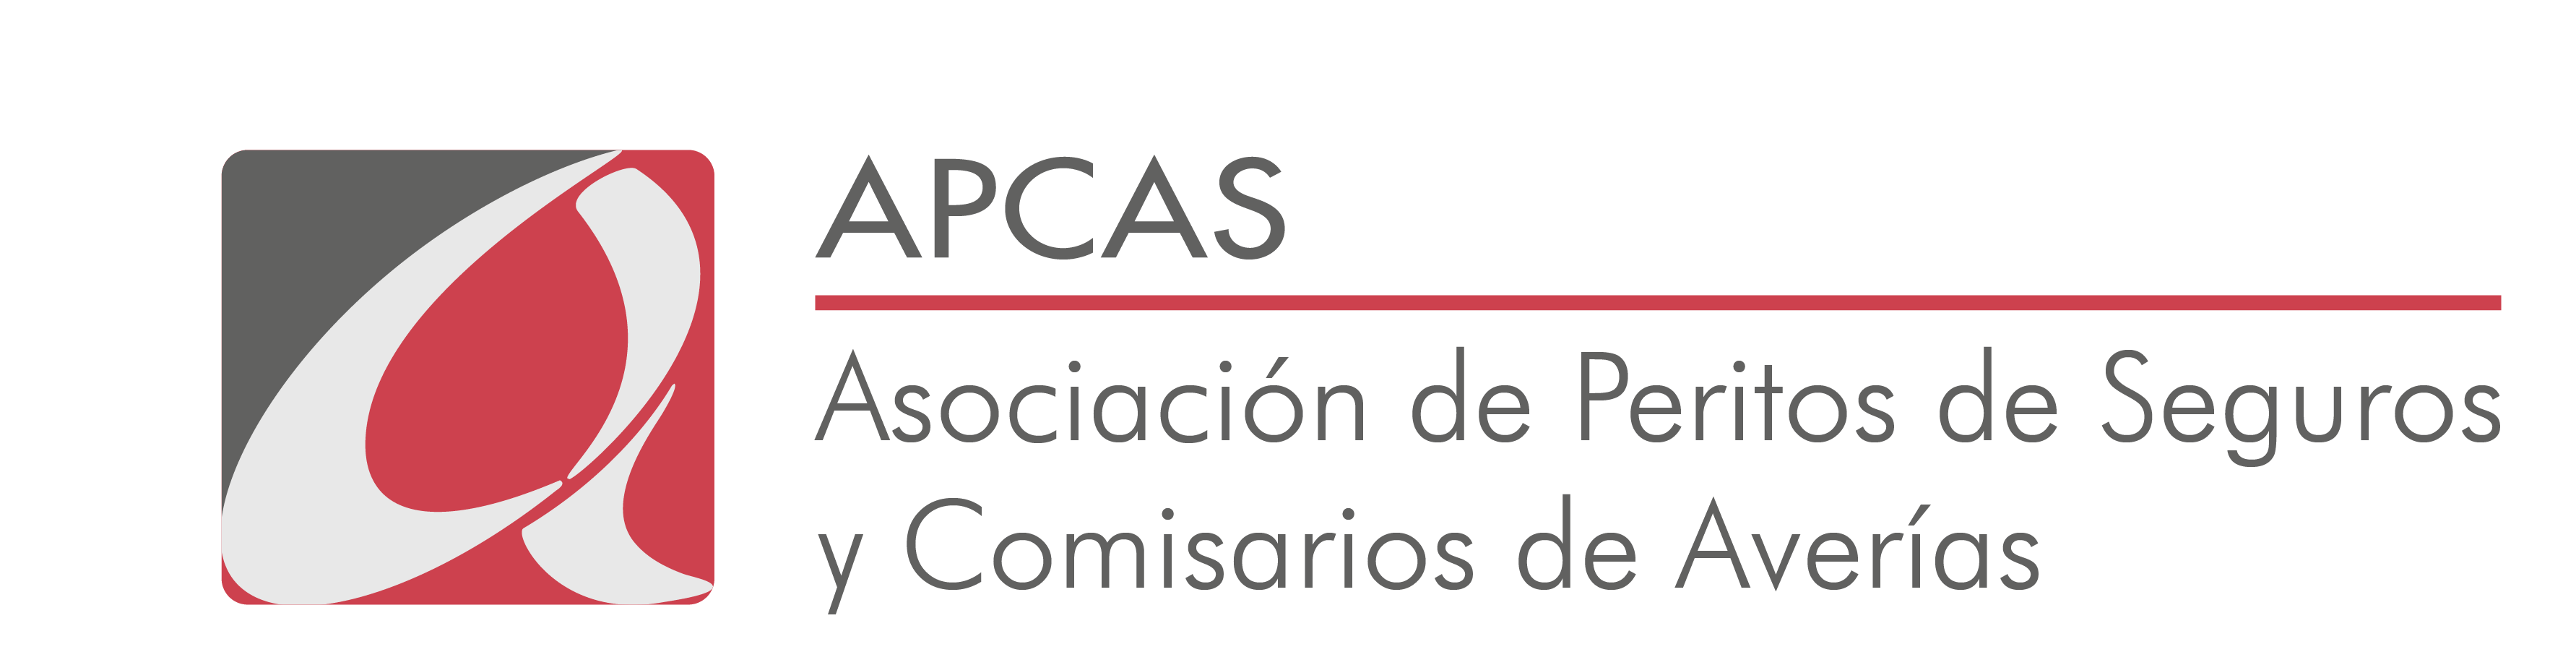 XI Congreso de Peritos de Seguros y Comisarios de Averías